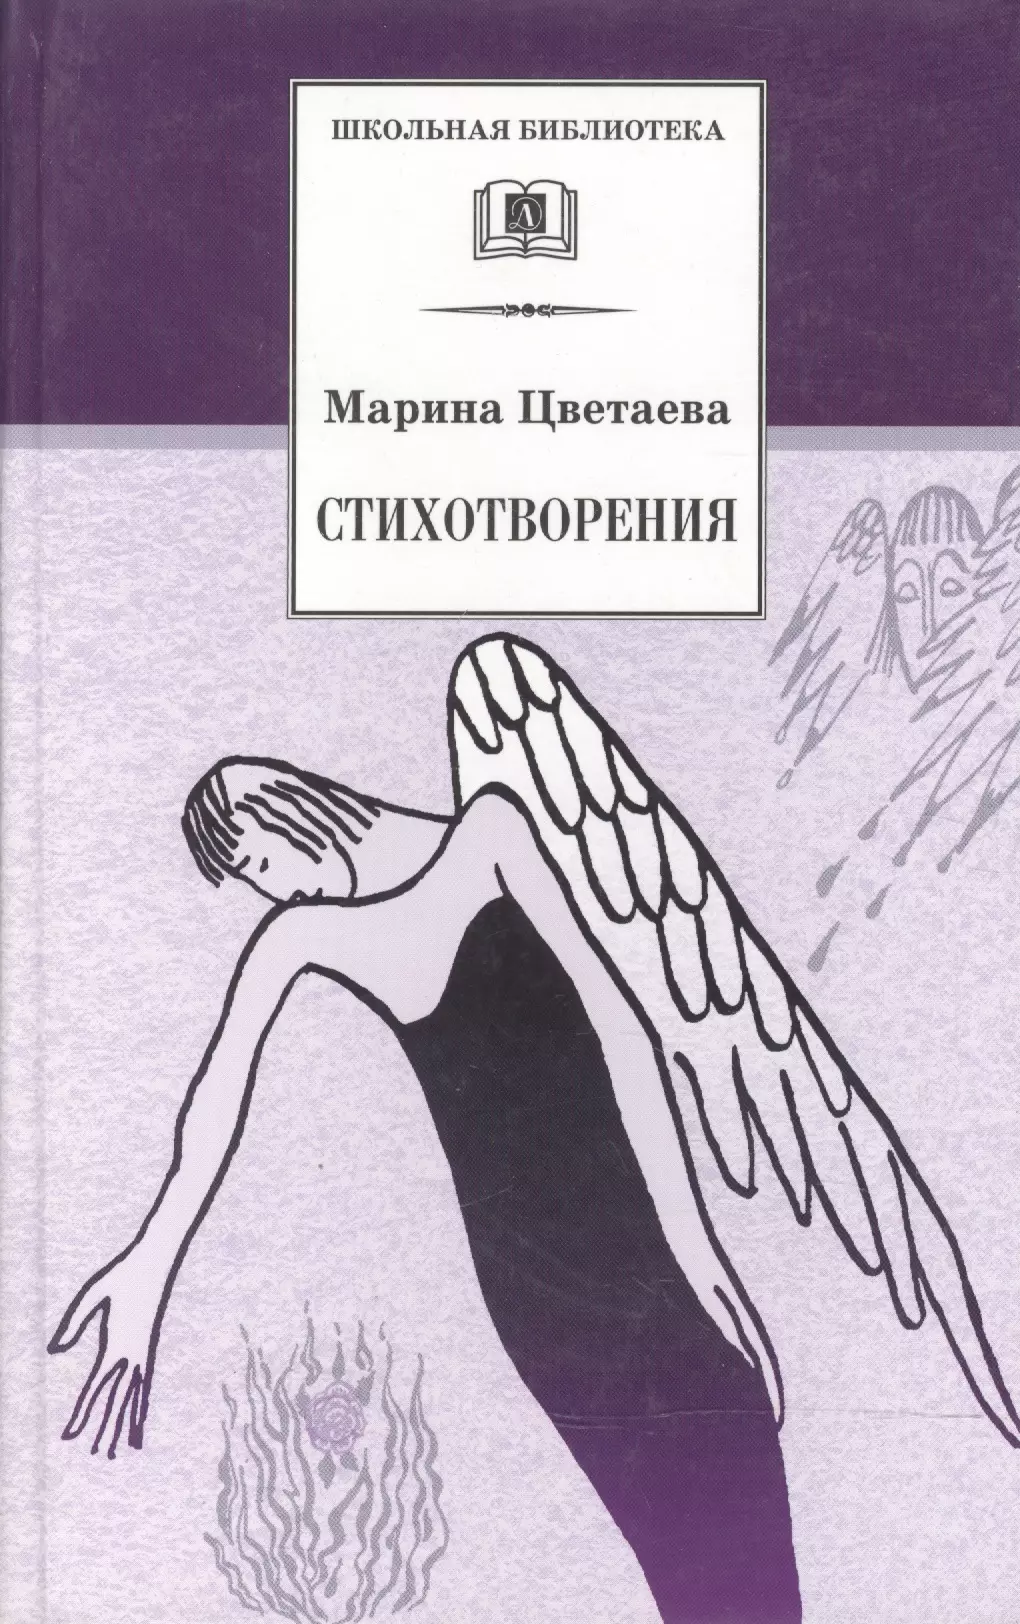 Марин Цветаева обложки книг